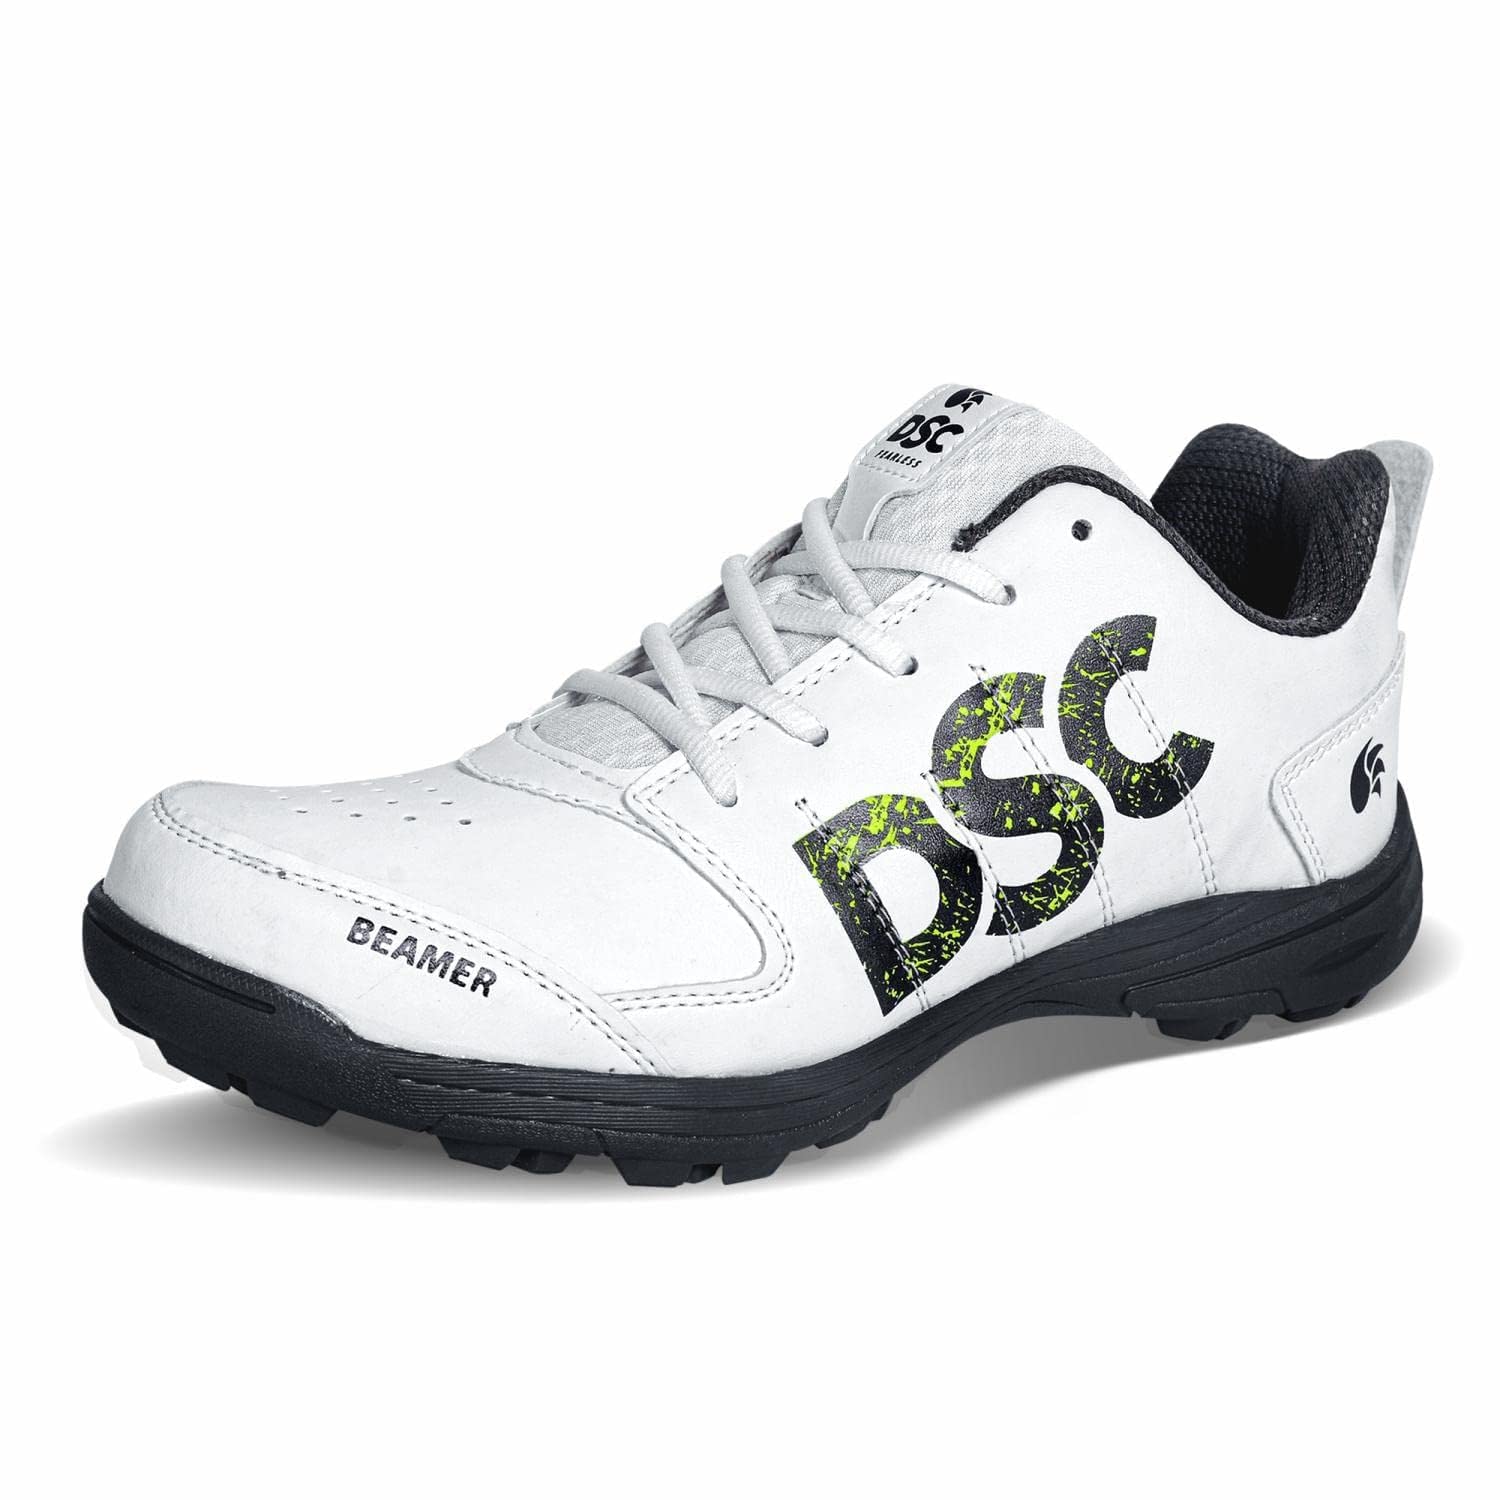 DSC 1503006 Size 11US Grey-White  Men BEAMER CRICKET SHOES